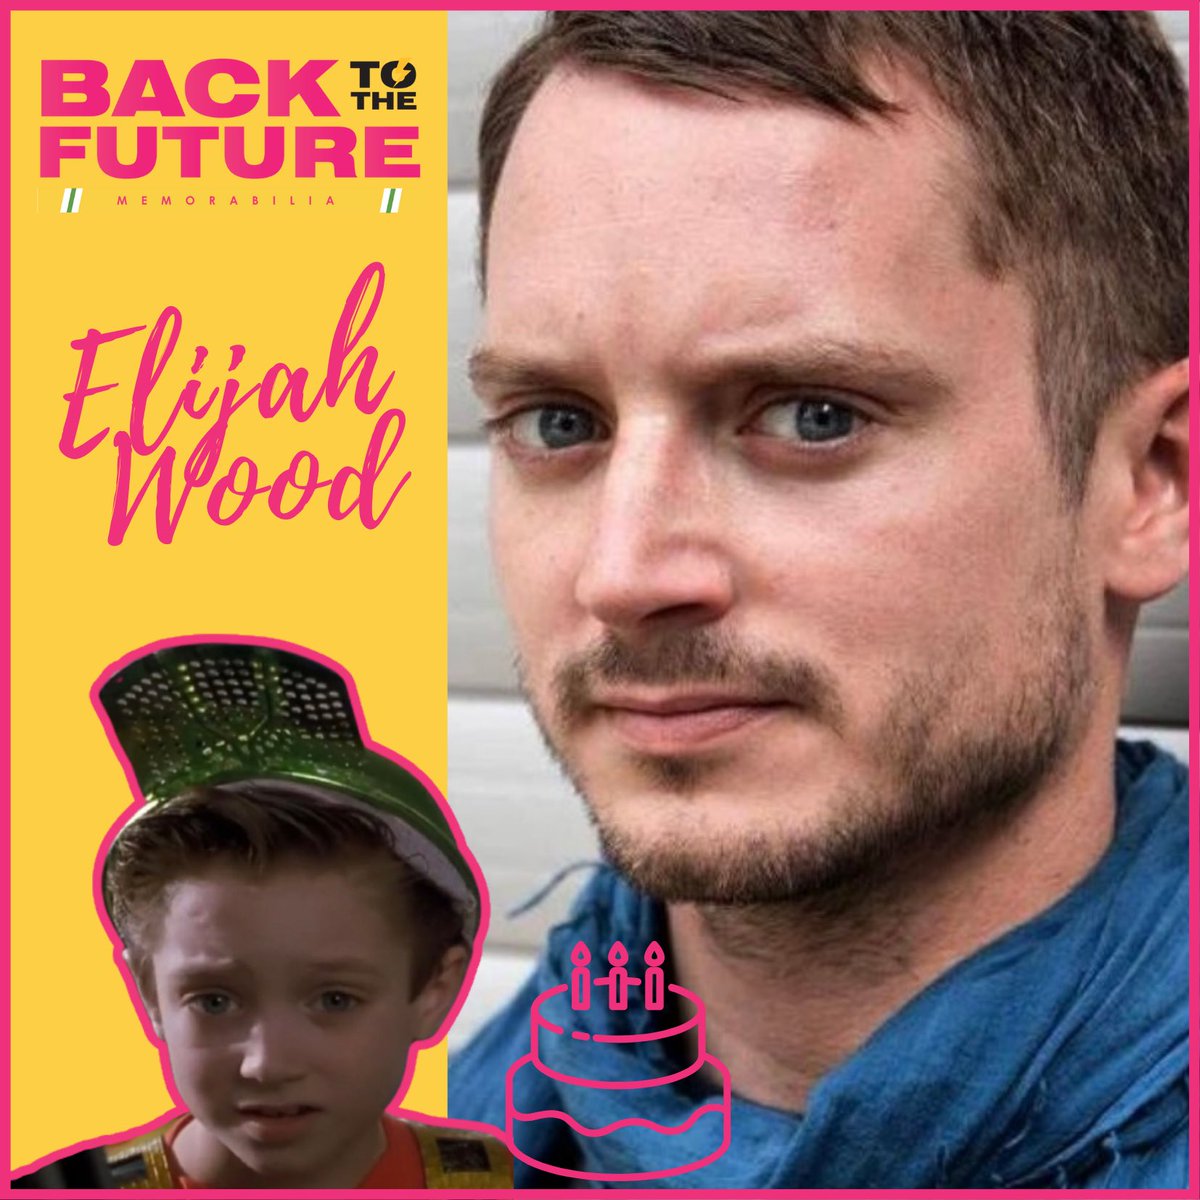 Happy birthday @elijahwood 🥳
#backtothefuture #ritornofuturo #frodo #ElijahWood #backtothefuturememorabilia